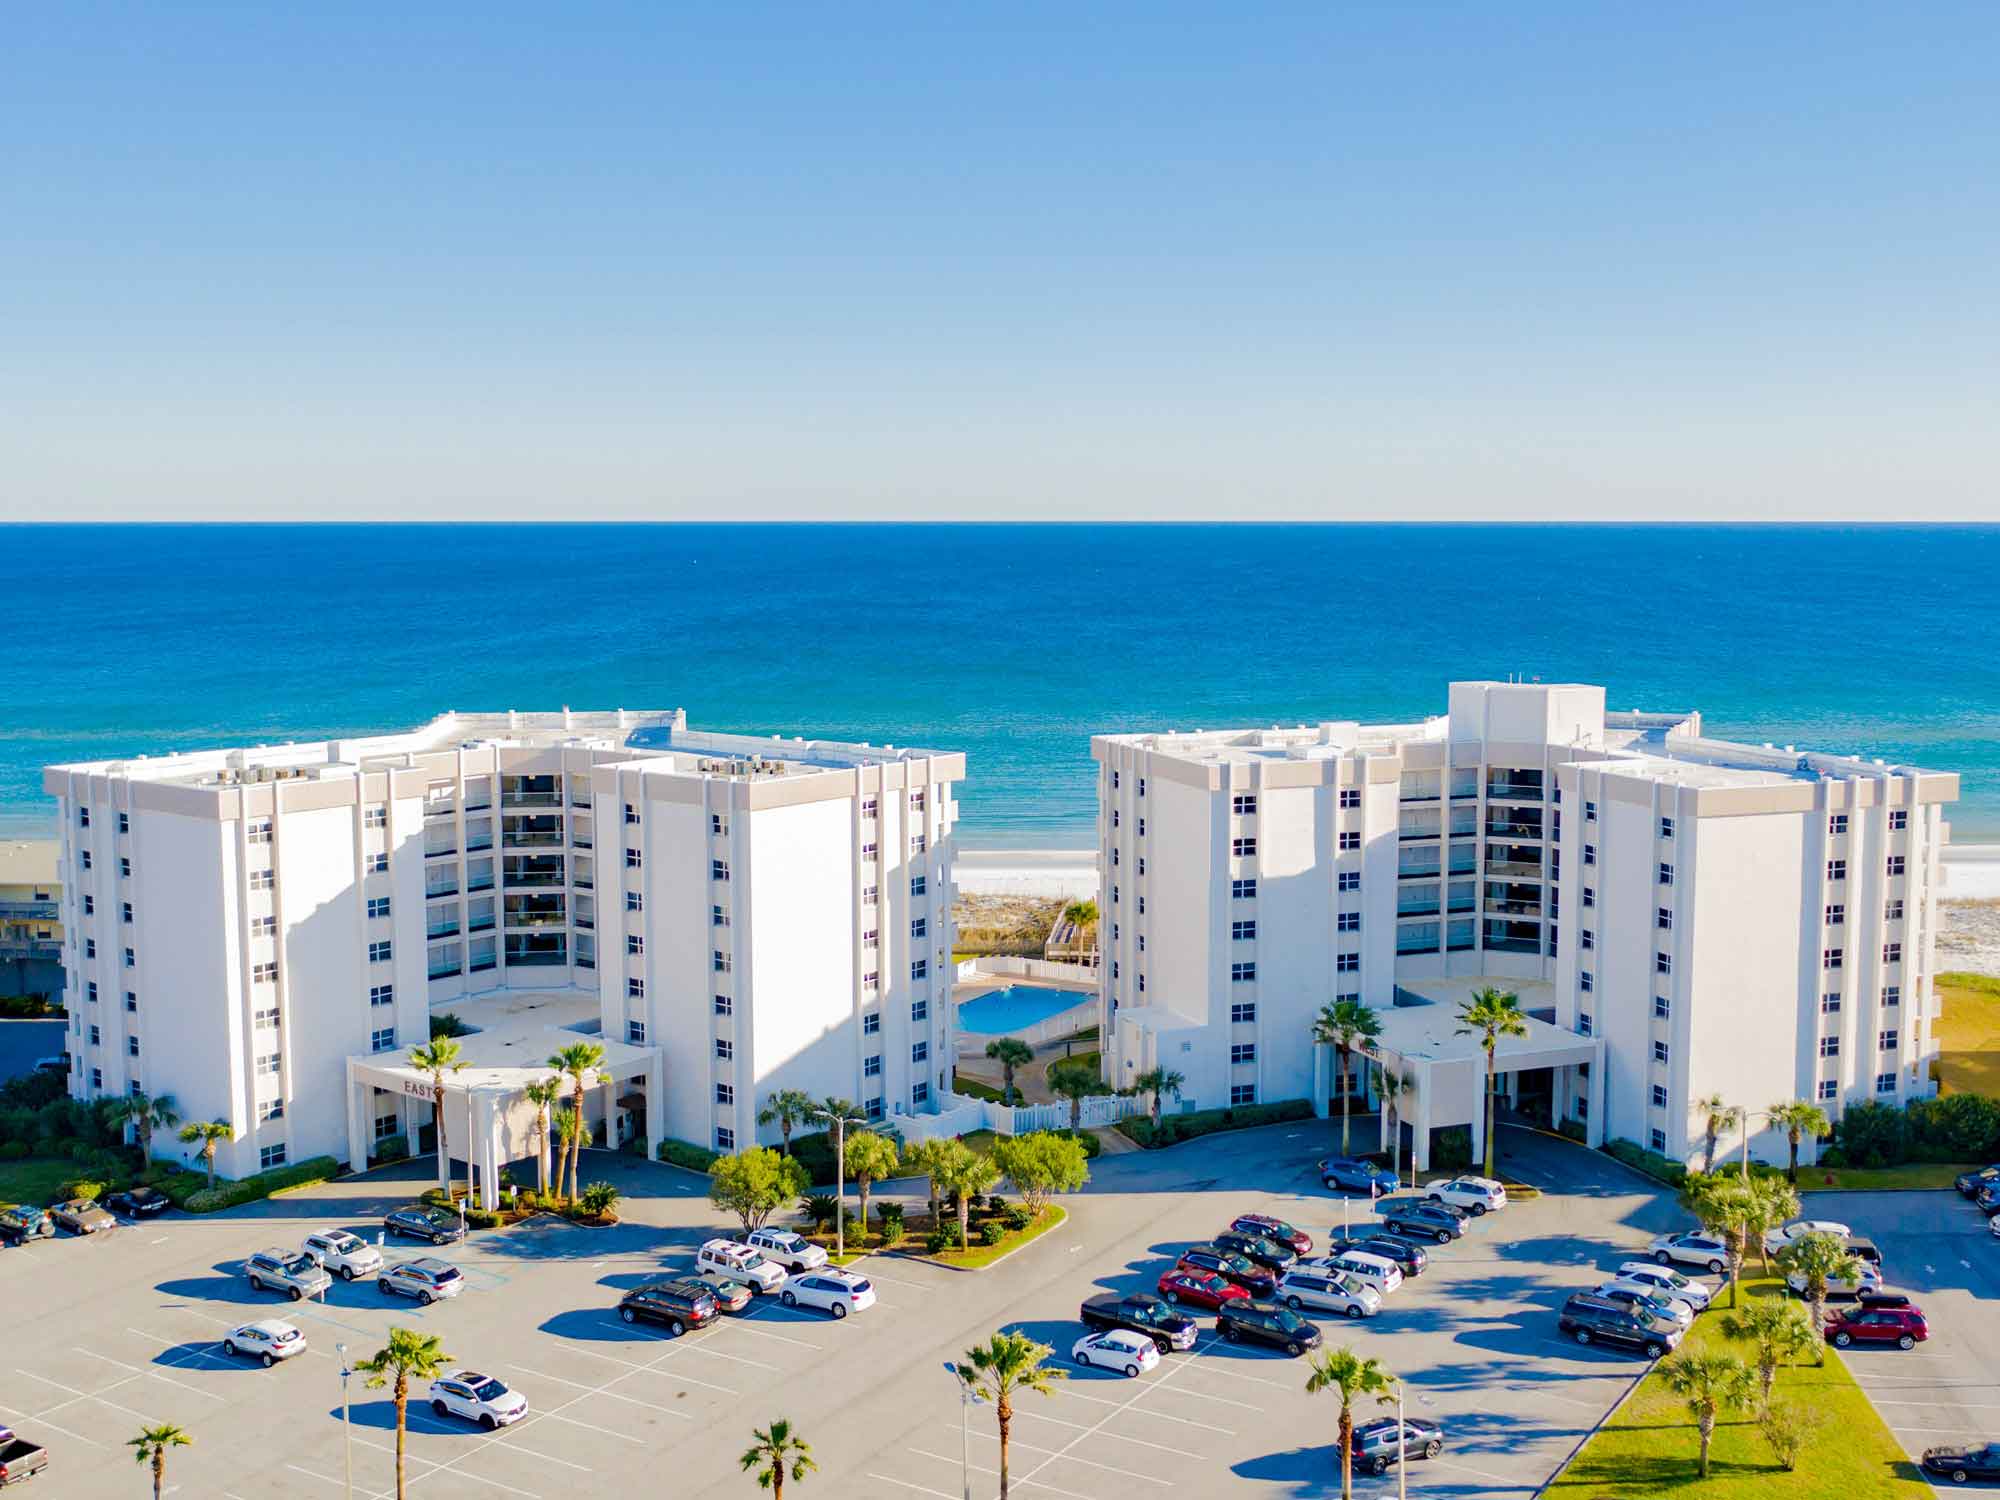 Pensacola Beach, Florida Vacation Rental